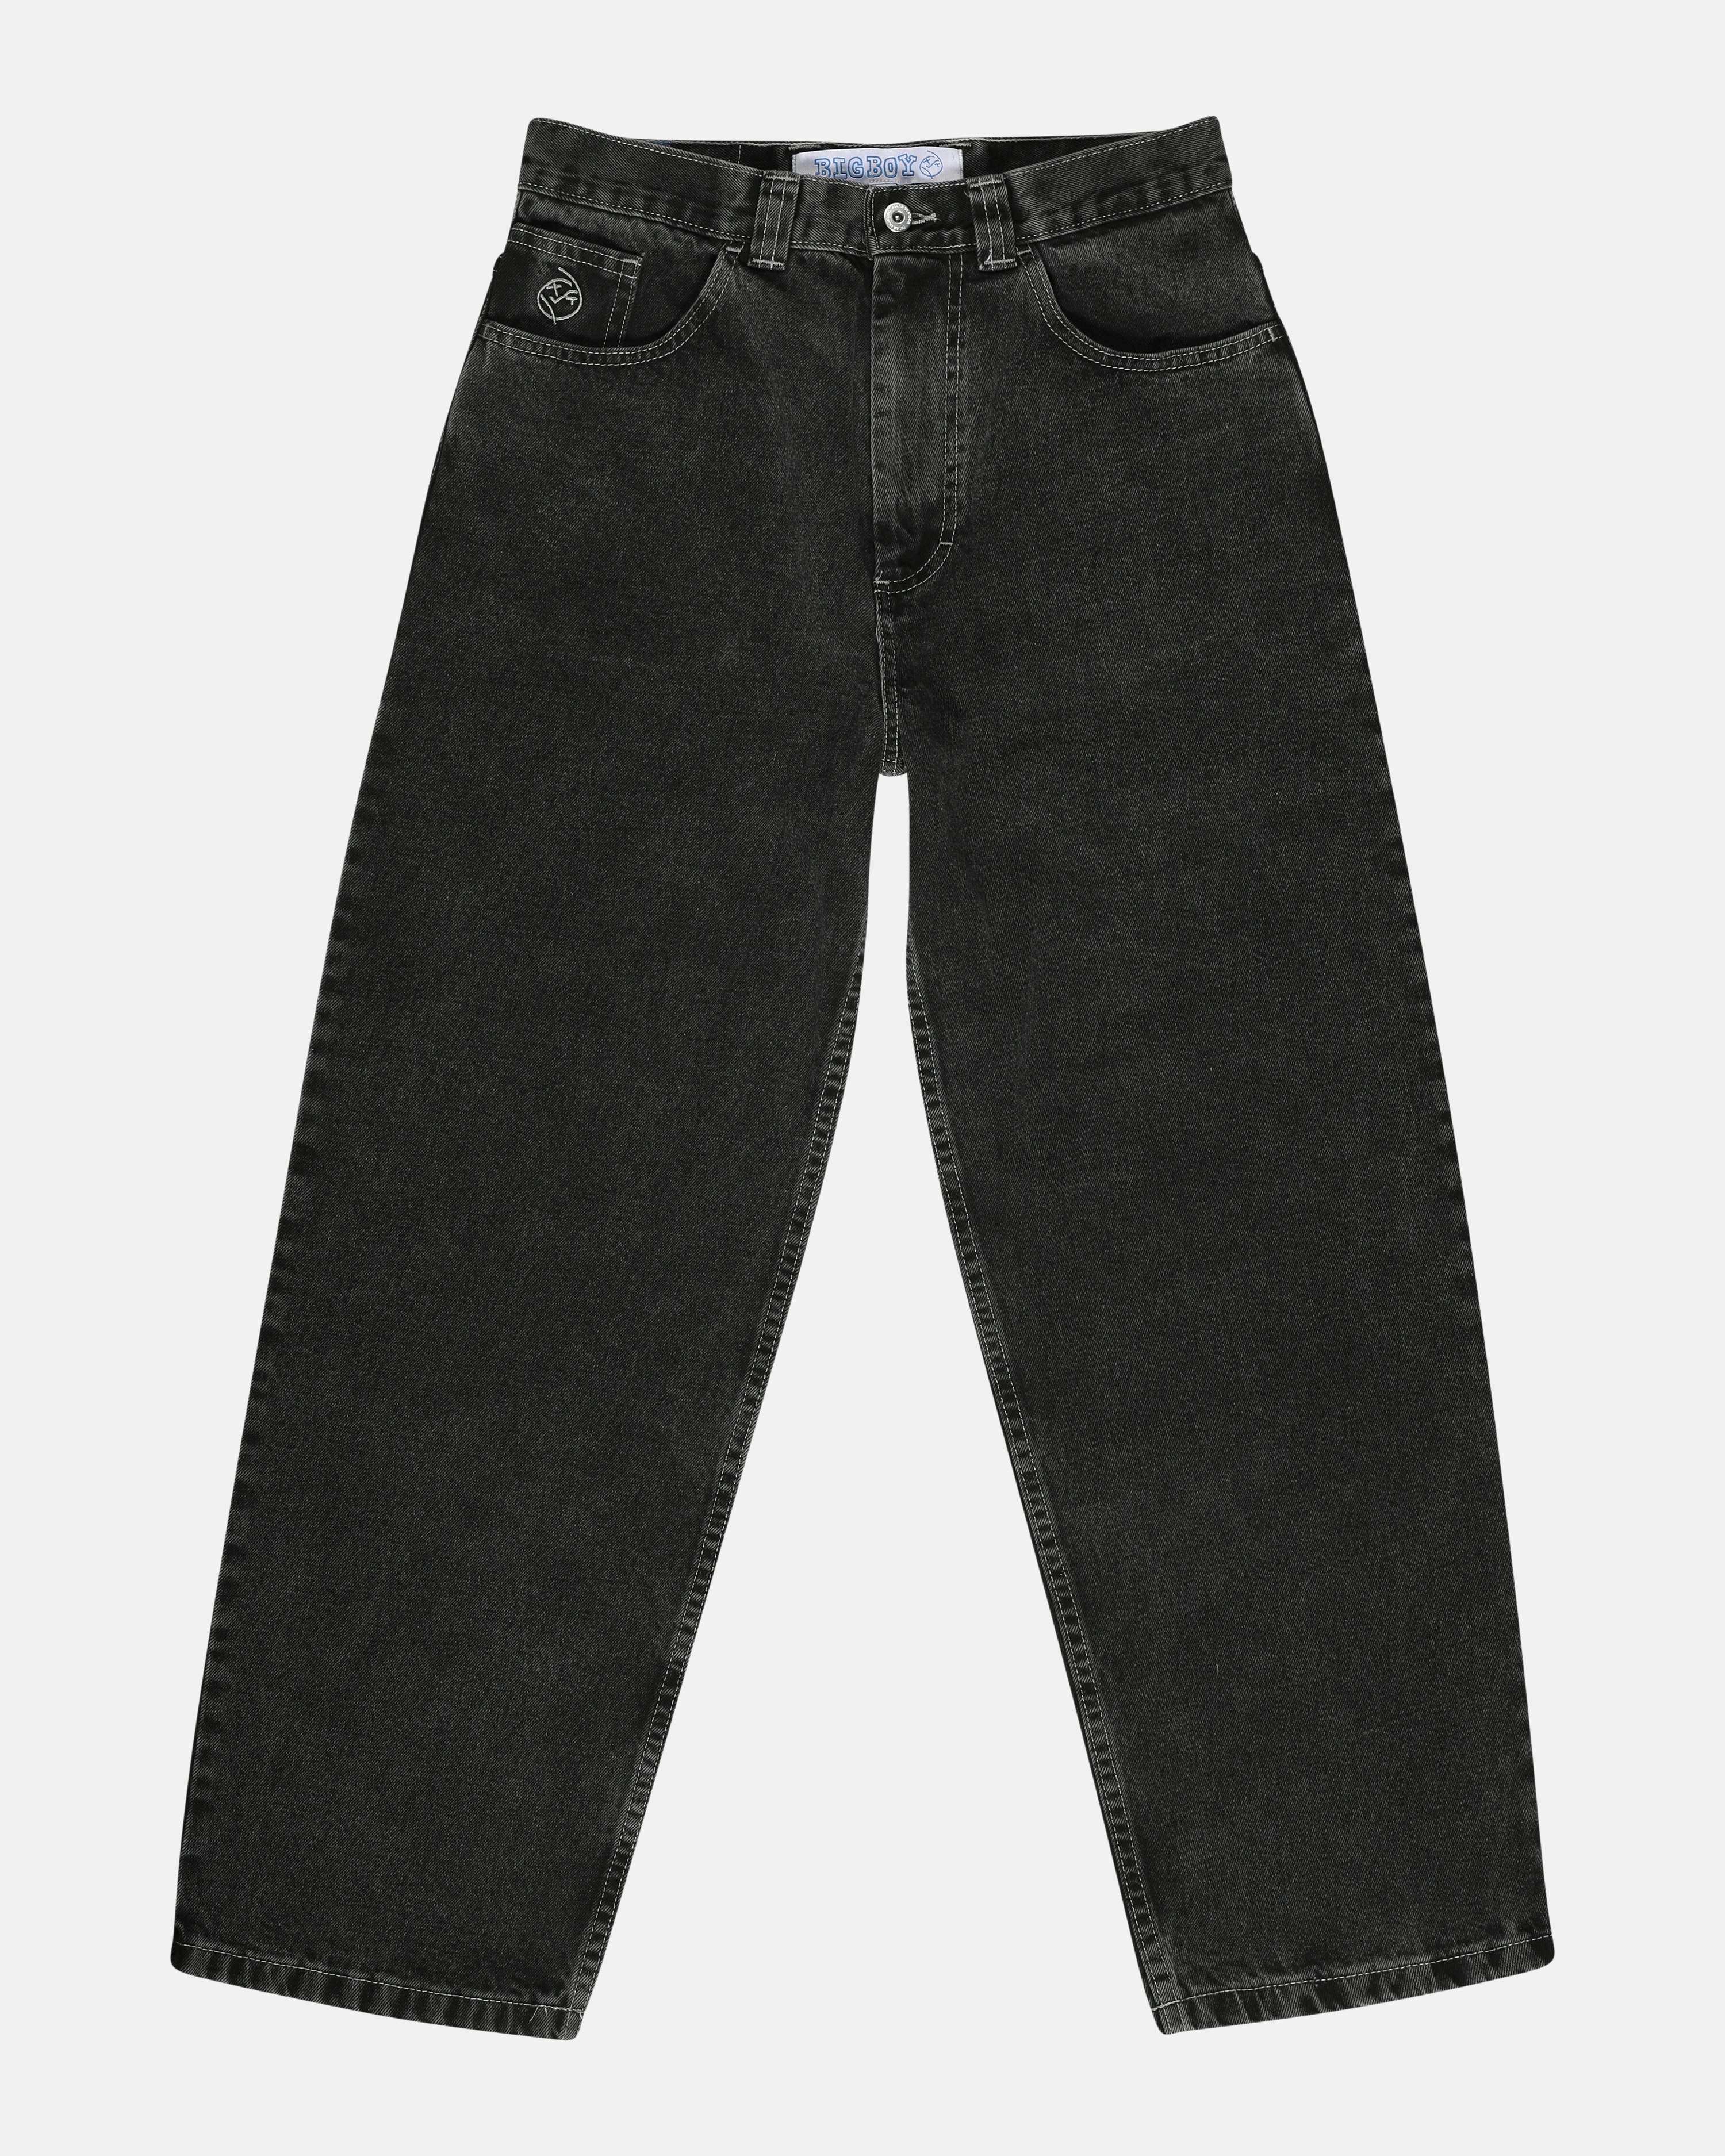 Polar Skate Co. Big Boy jeans Black | Unisex | Junkyard